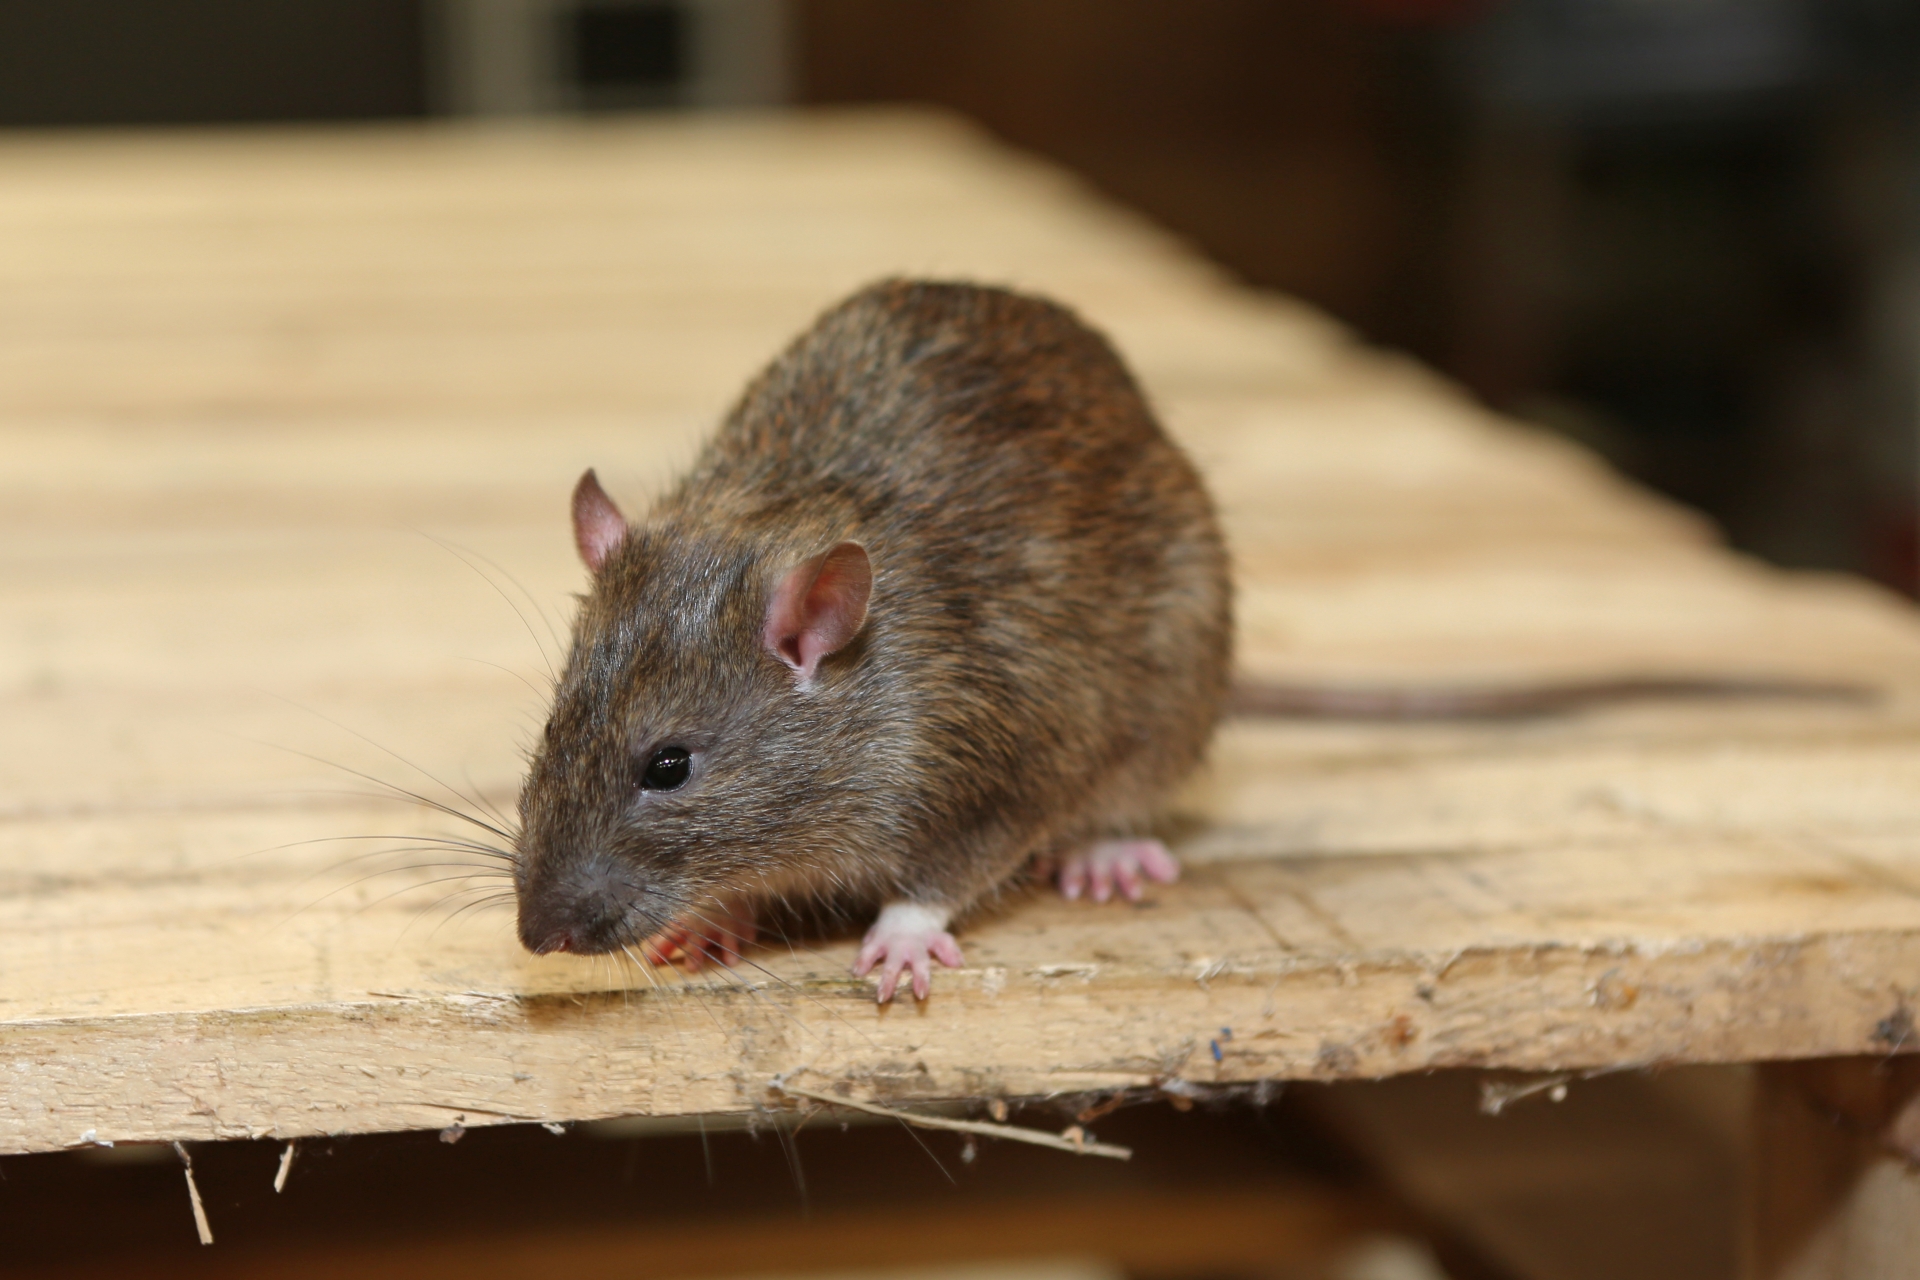 Rat extermination, Pest Control in Wallington, SM6. Call Now 020 8166 9746